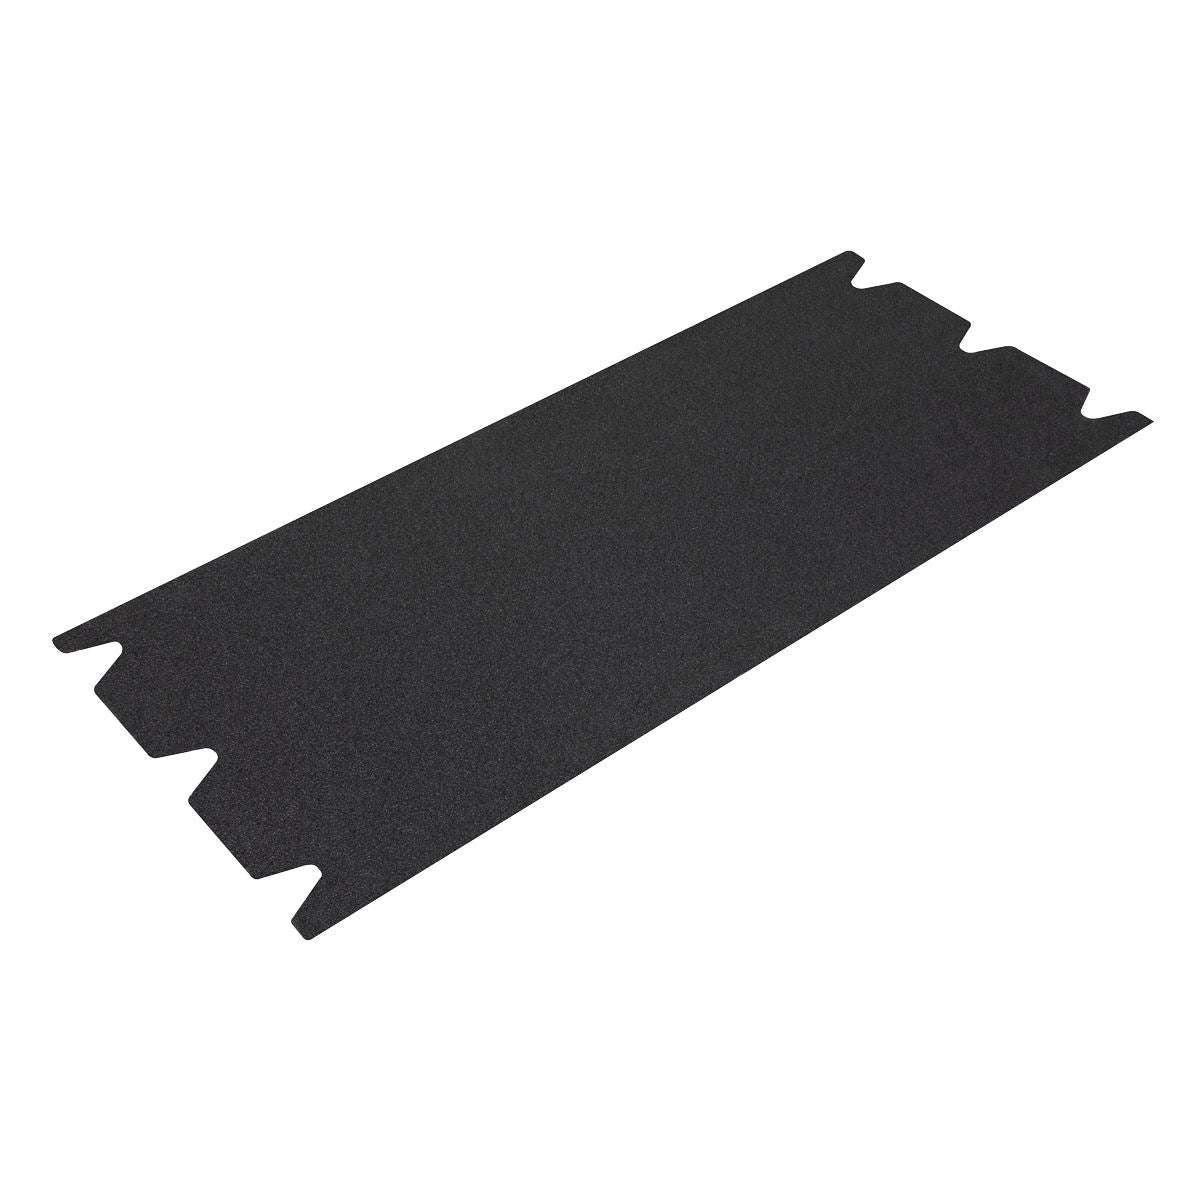 Sealey Floor Sanding Sheet 205 x 470mm 80Grit - Pack of 25